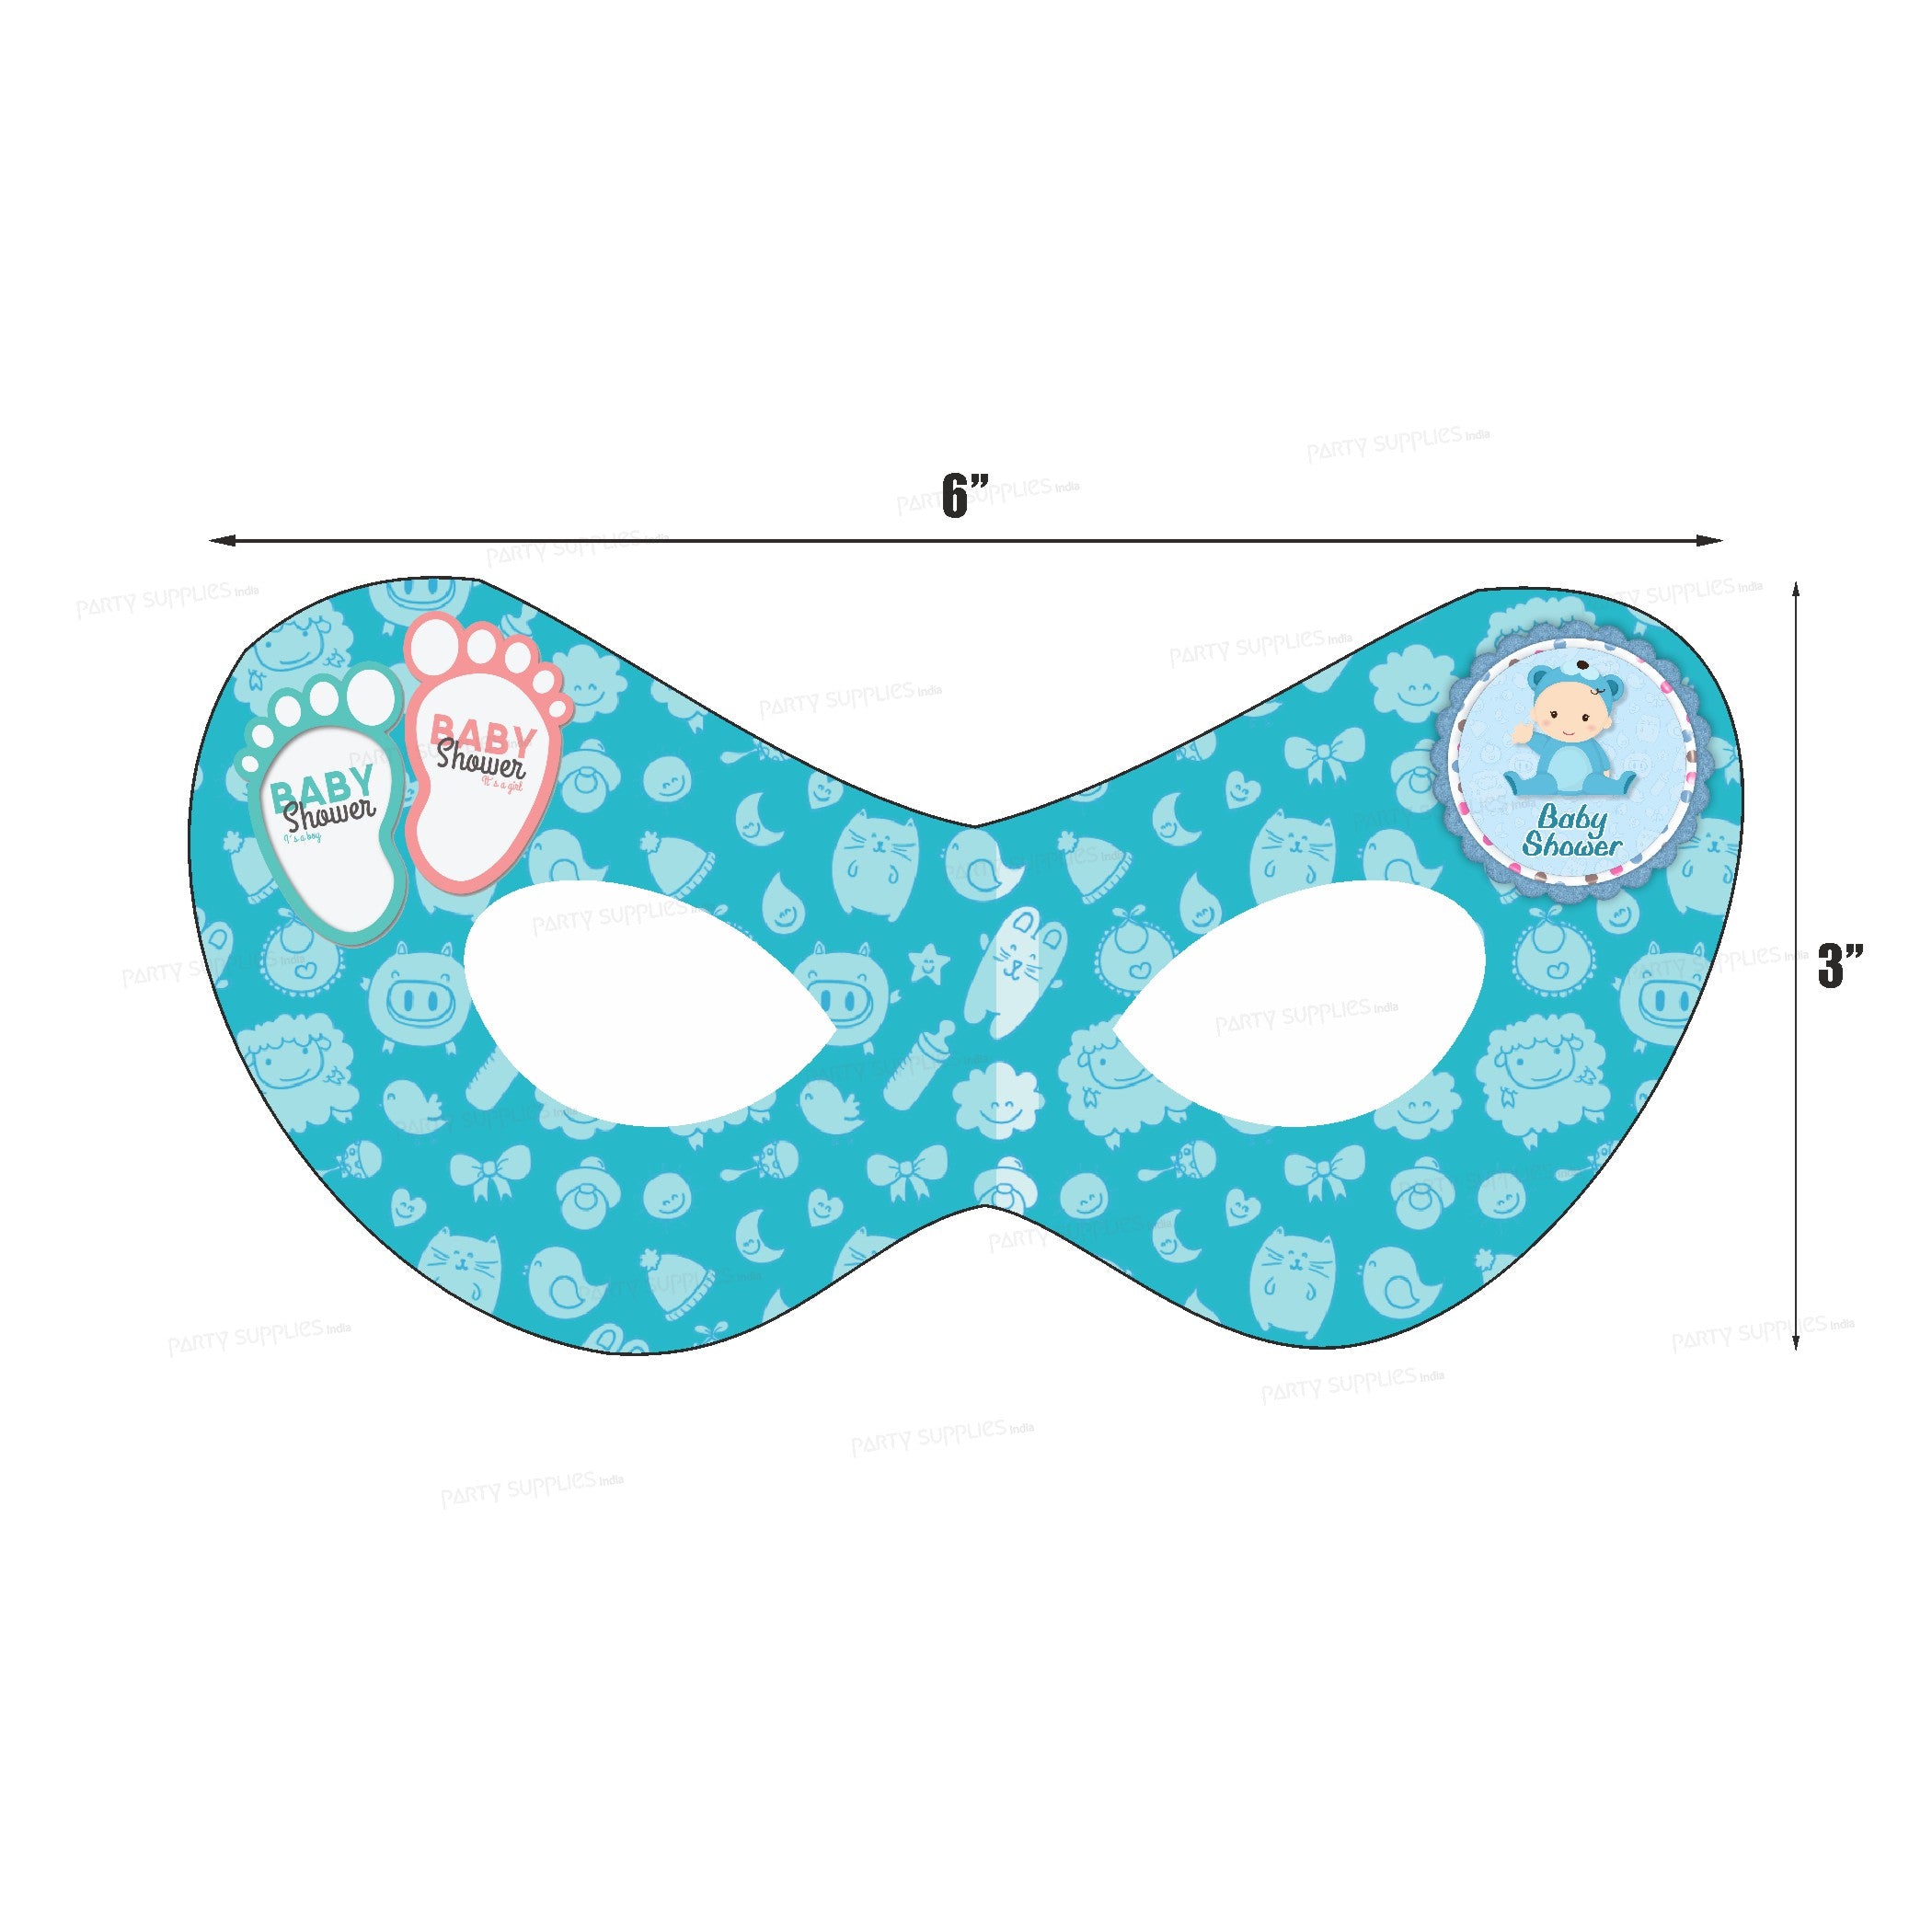 PSI Baby Shower Theme Customized  Eye Mask